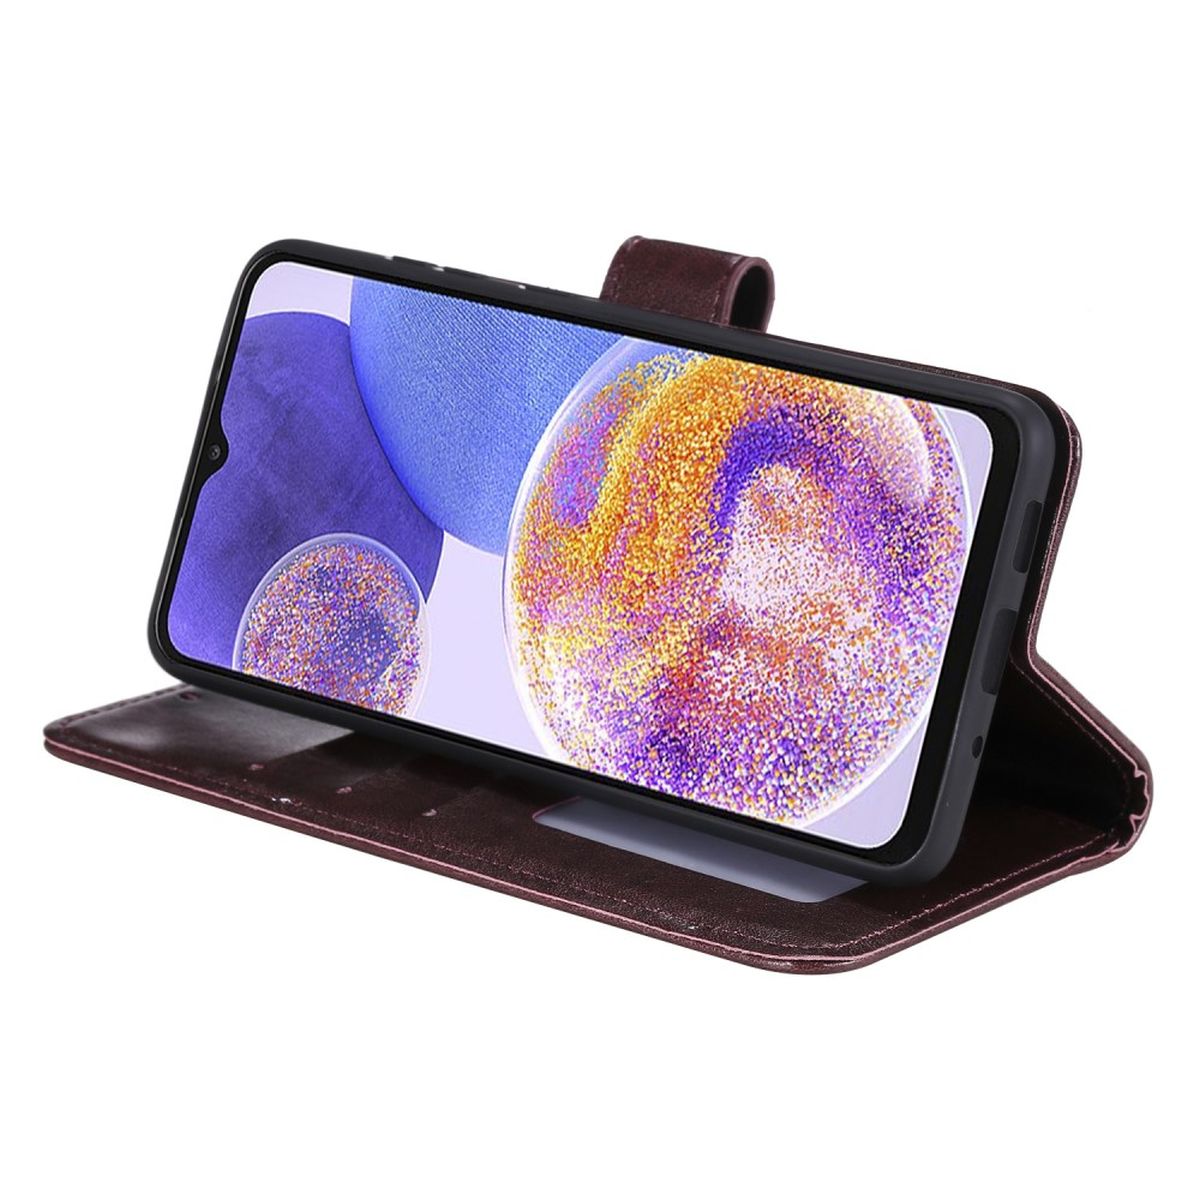 Hülle für Samsung Galaxy A23 Handyhülle Flip Case Cover Etui Mandala Braun